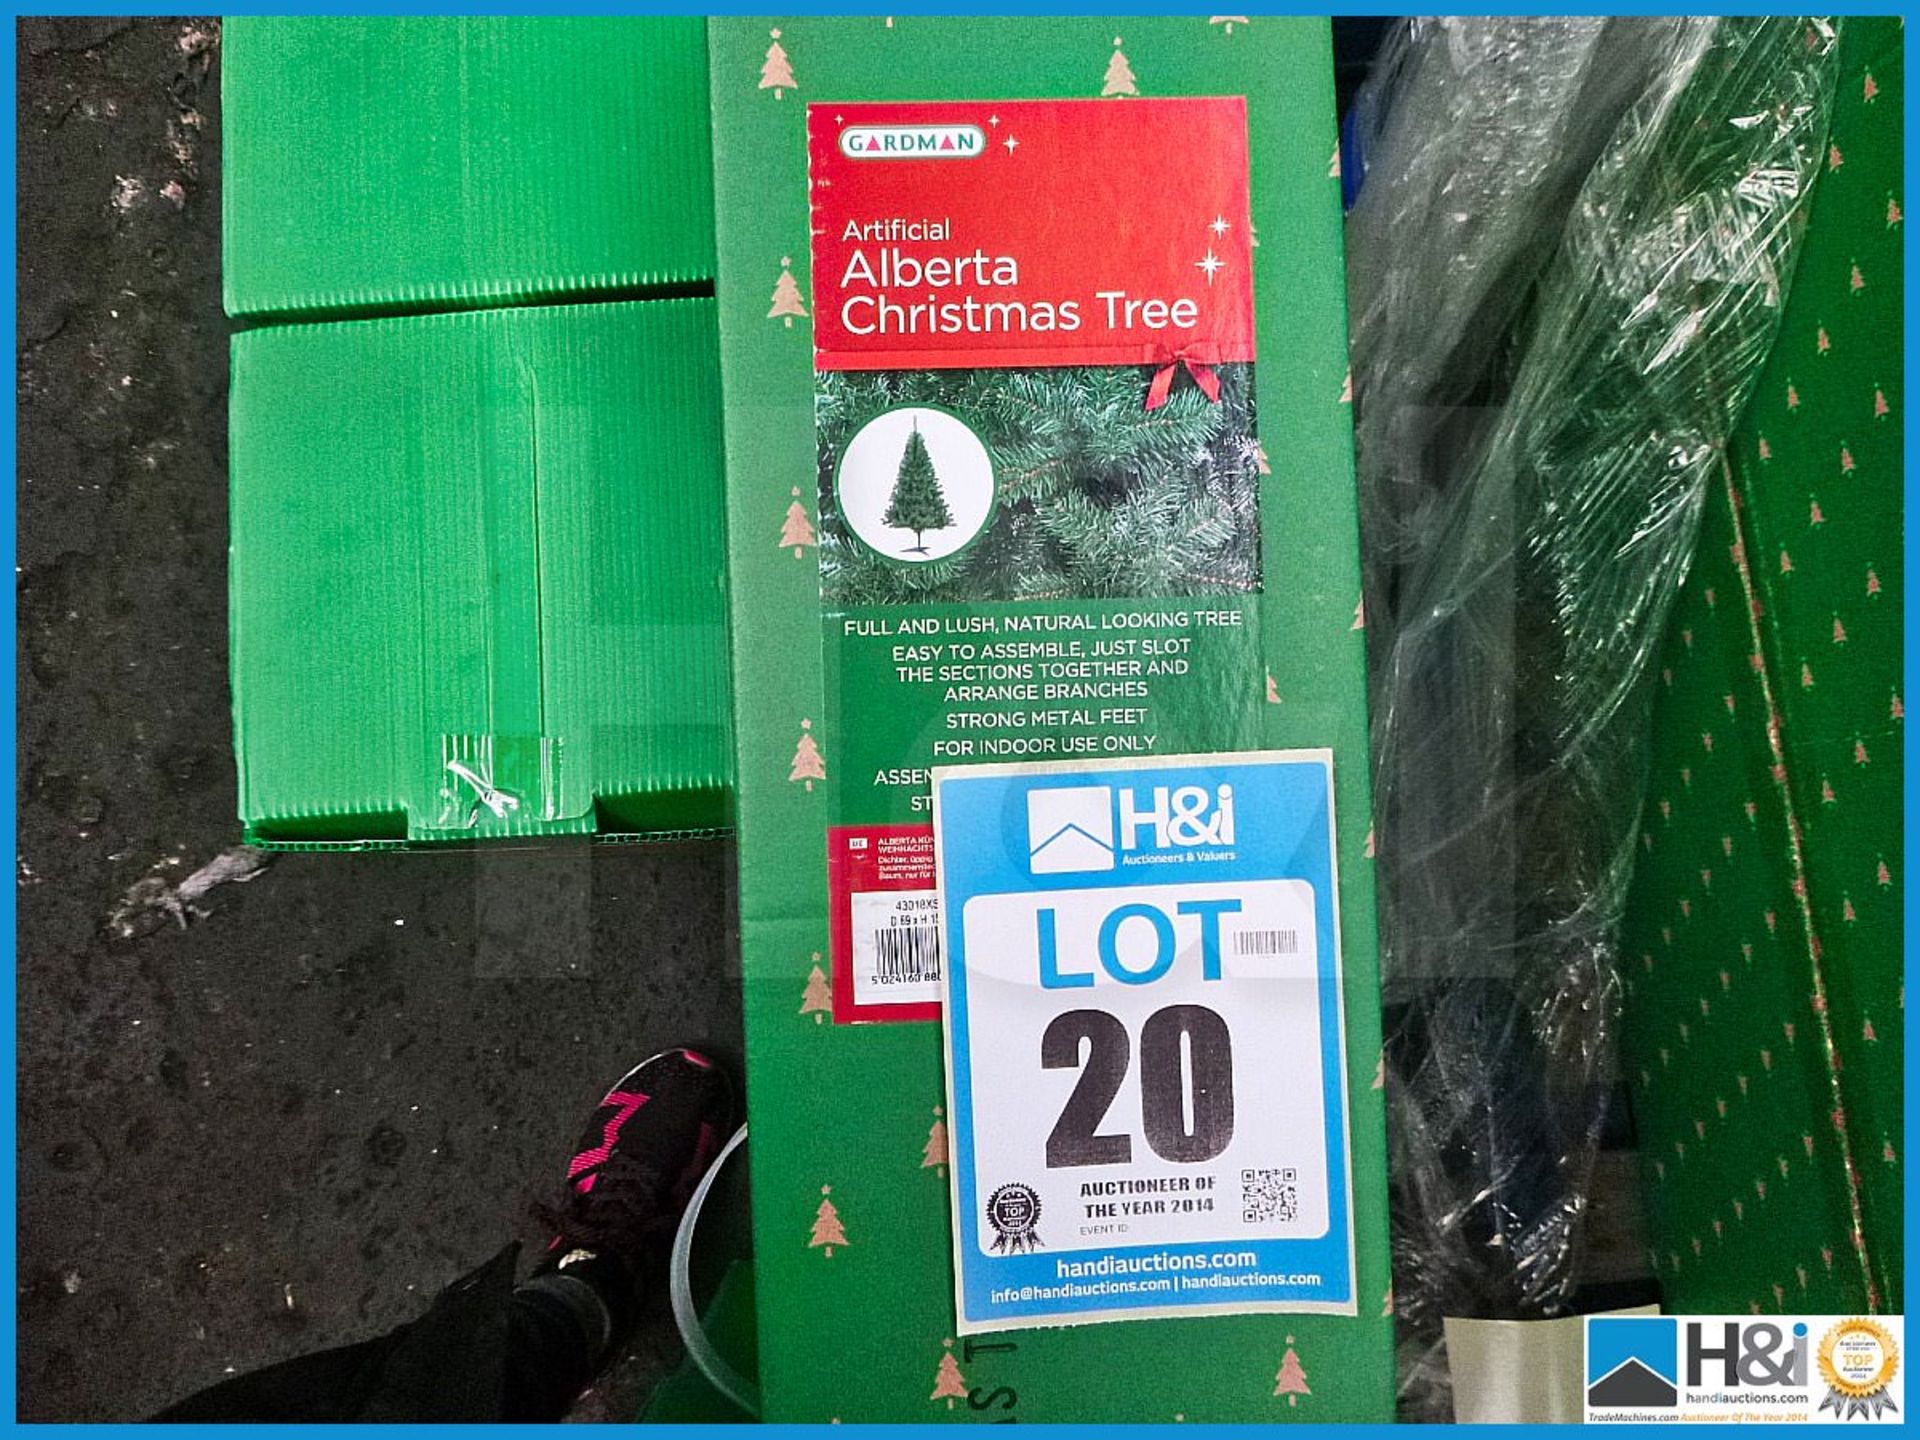 GARDMAN ARTIFICIAL 5' ALBERTA CHRISTMAS TREE, 43018XS, RRP £42.99, FULL AND LUSH NATURAL LOOKING TRE